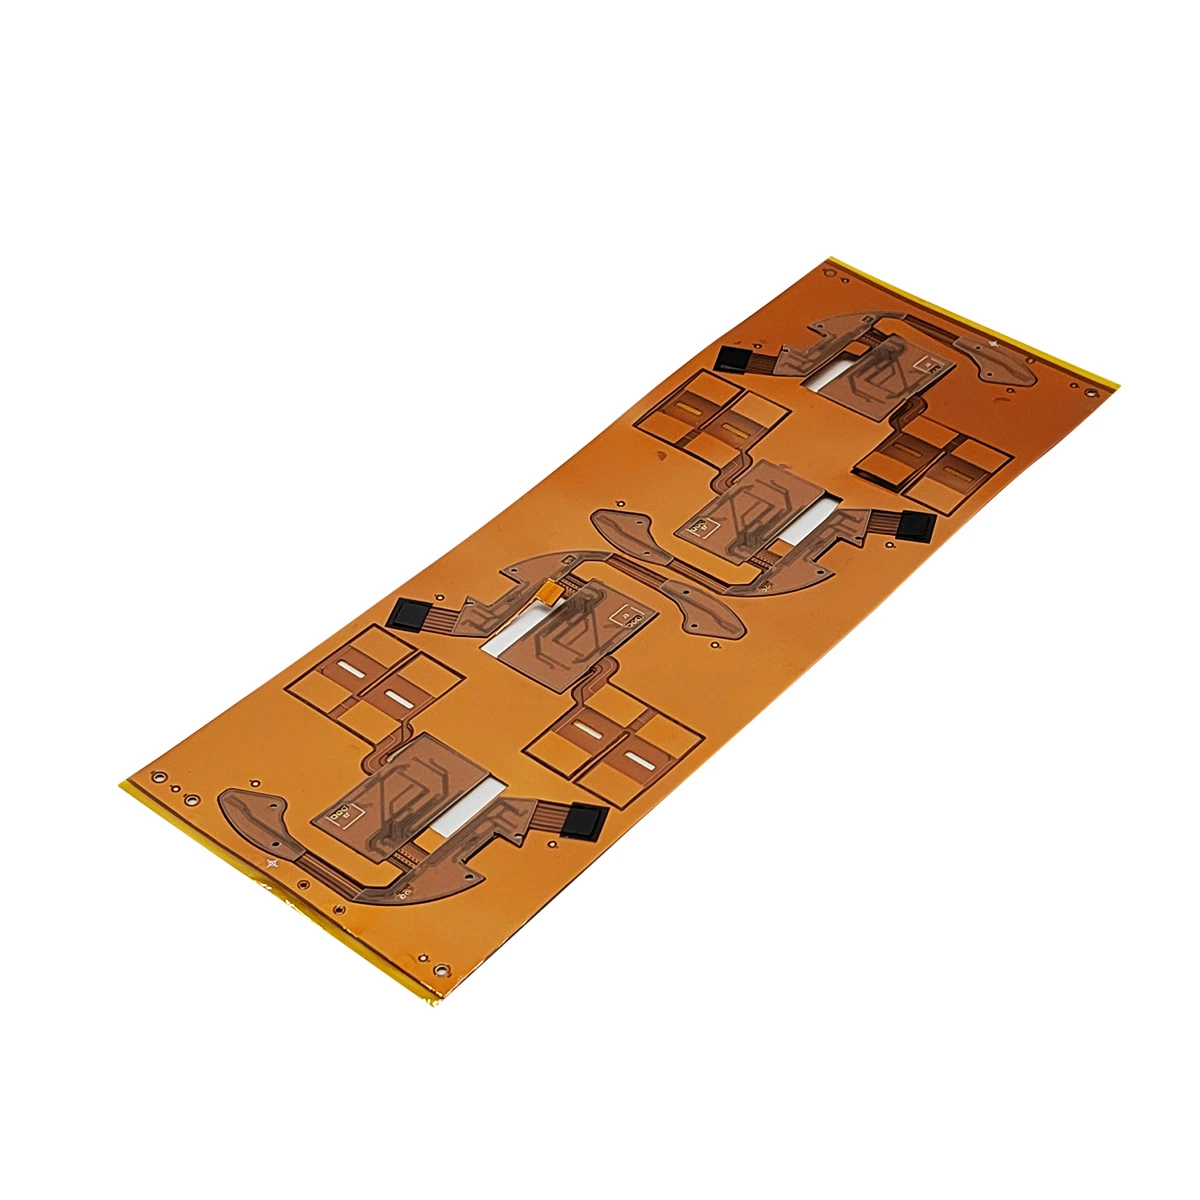 PCB Flexible Prototype Rigid Flexible PCB Assembly PCBA Rigid Flex Multilayer PCB Board Printed Circuit Board